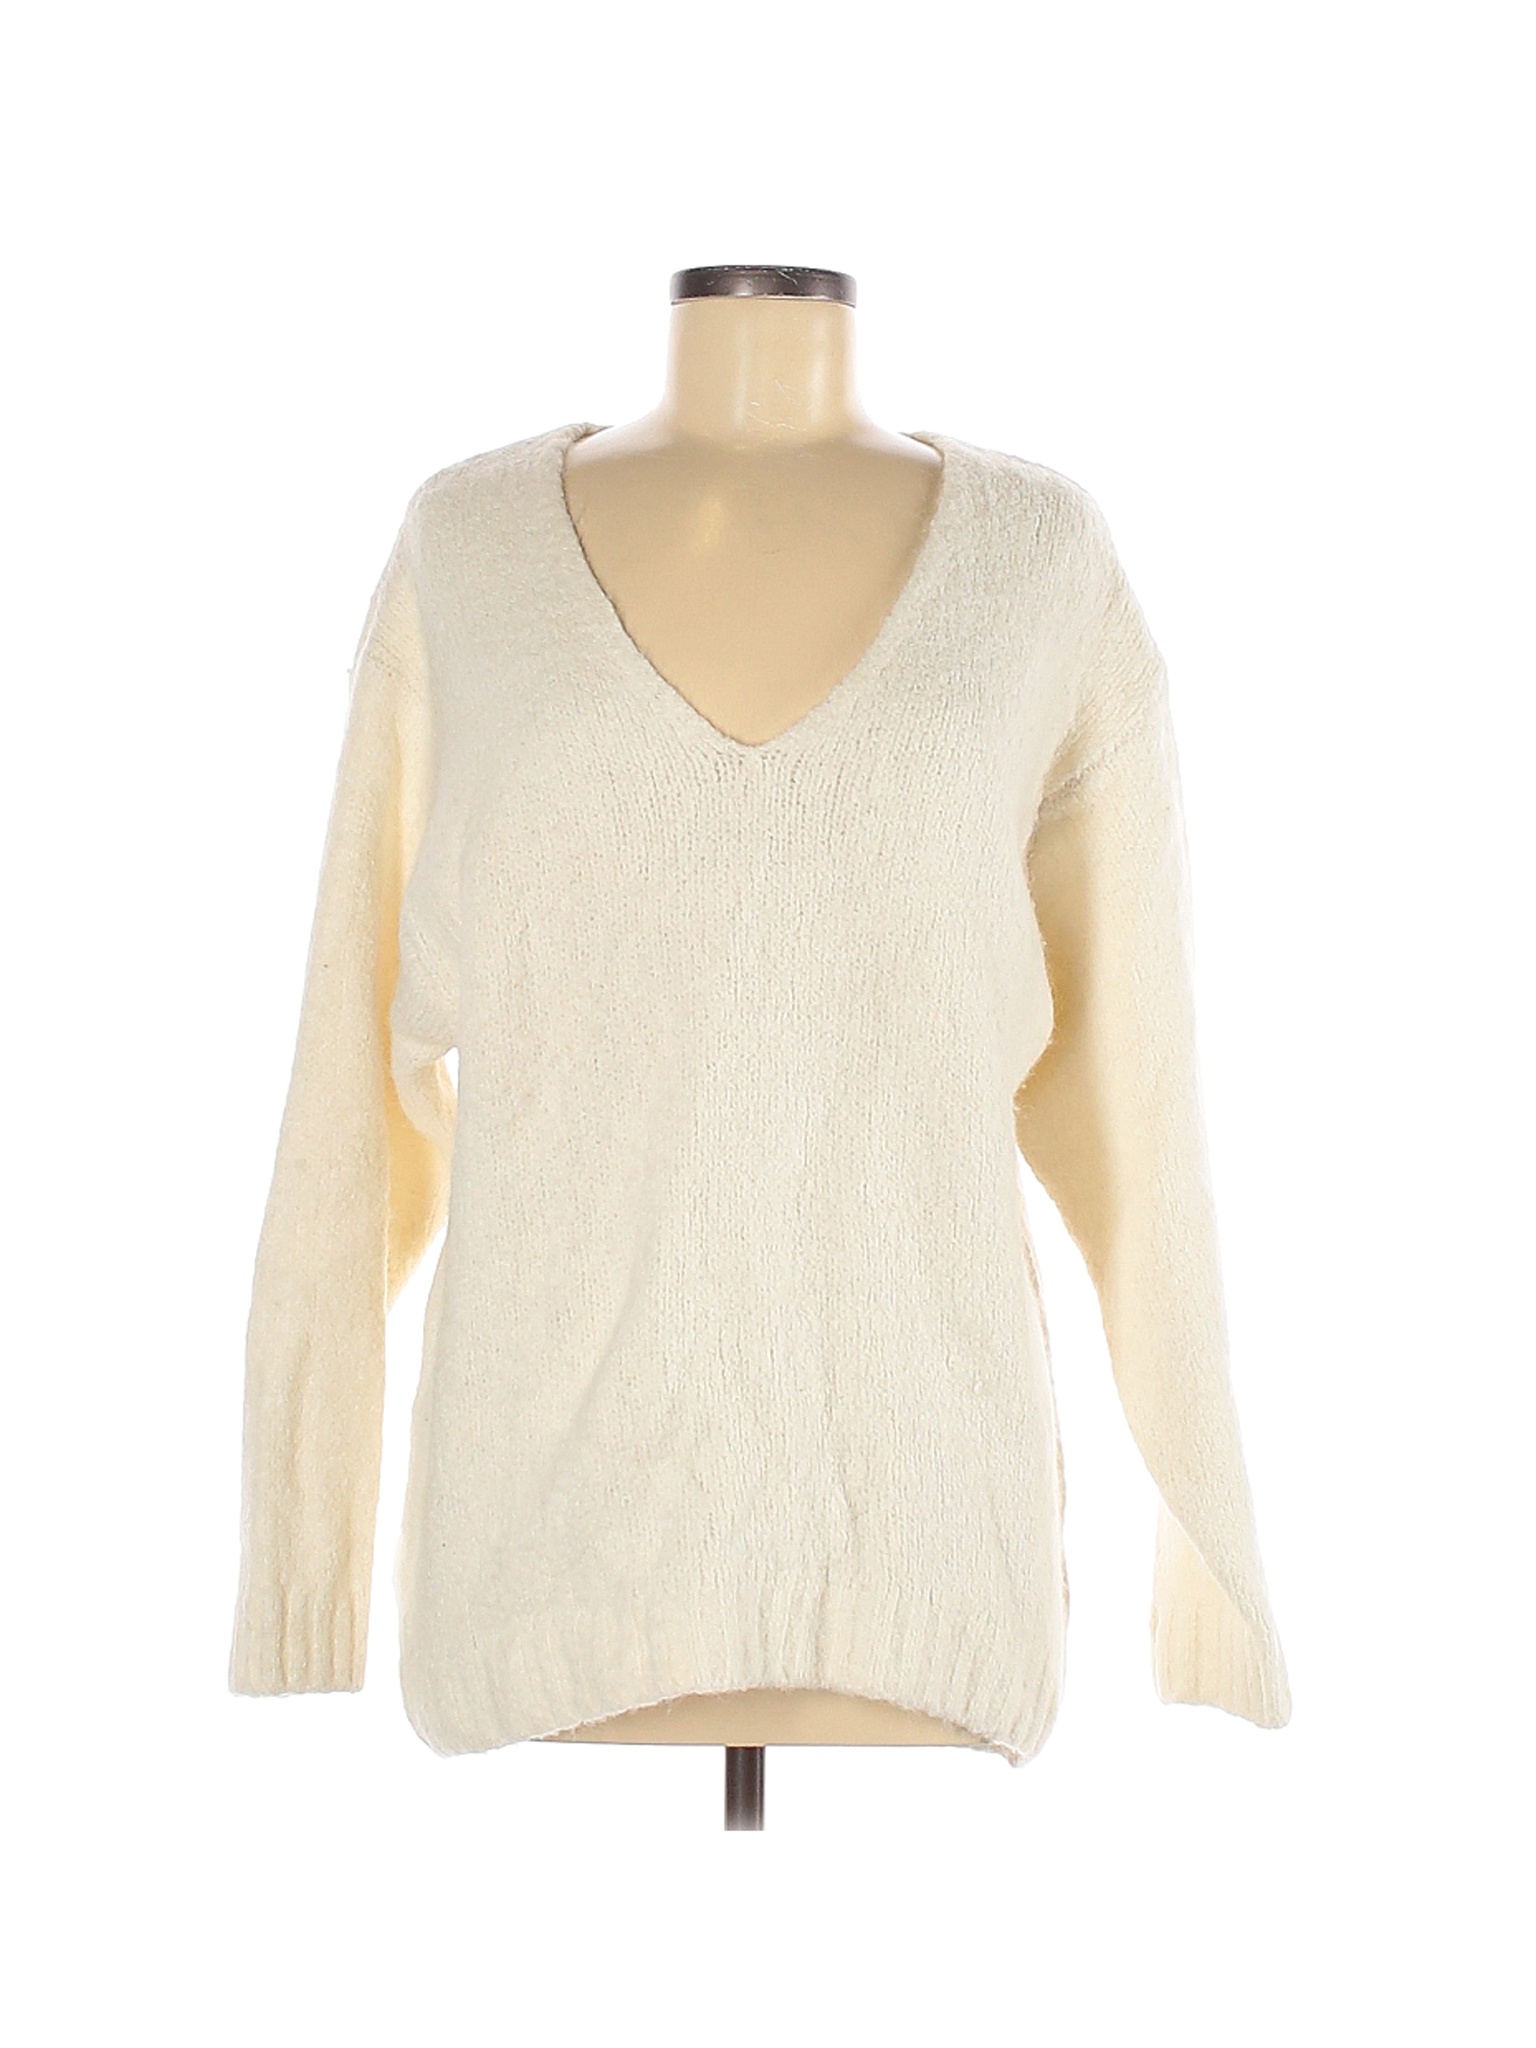 H&M Women Ivory Pullover Sweater M | eBay